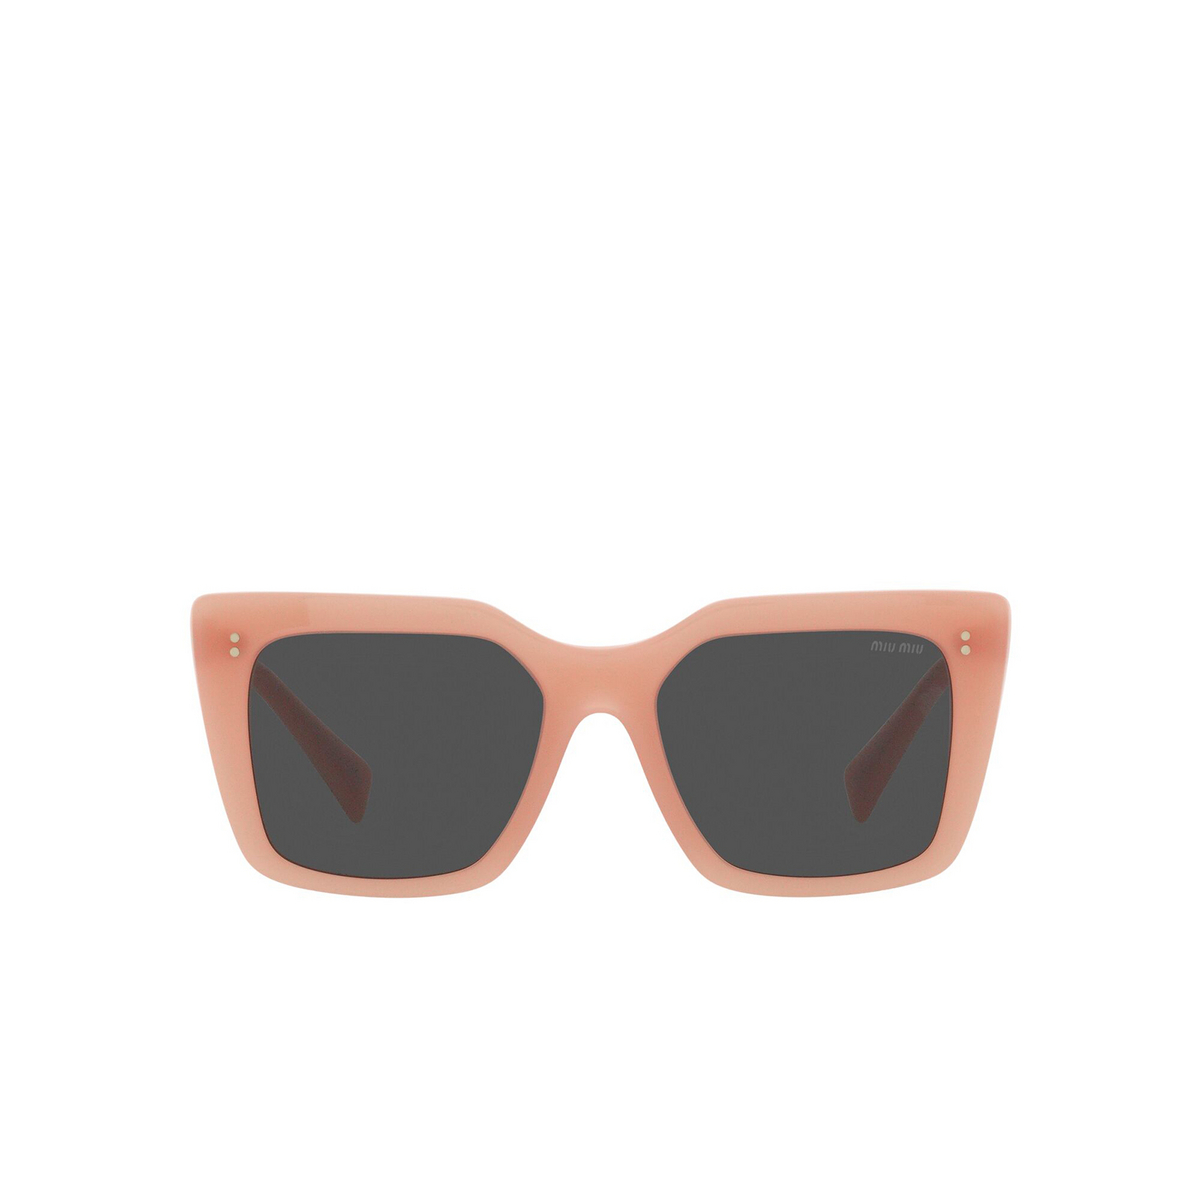 Miu Miu® Square Sunglasses: MU 02WS color Pink Opal 06X5S0 - front view.